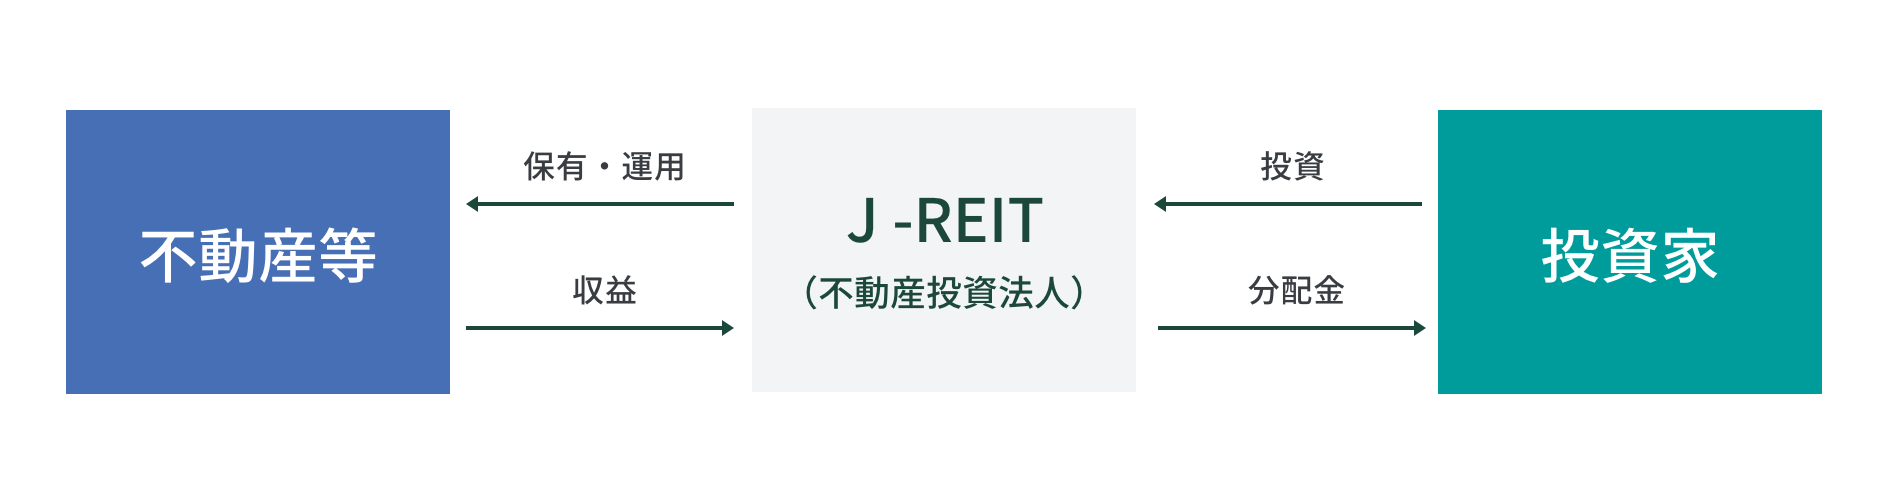 J-REITの簡単な仕組み